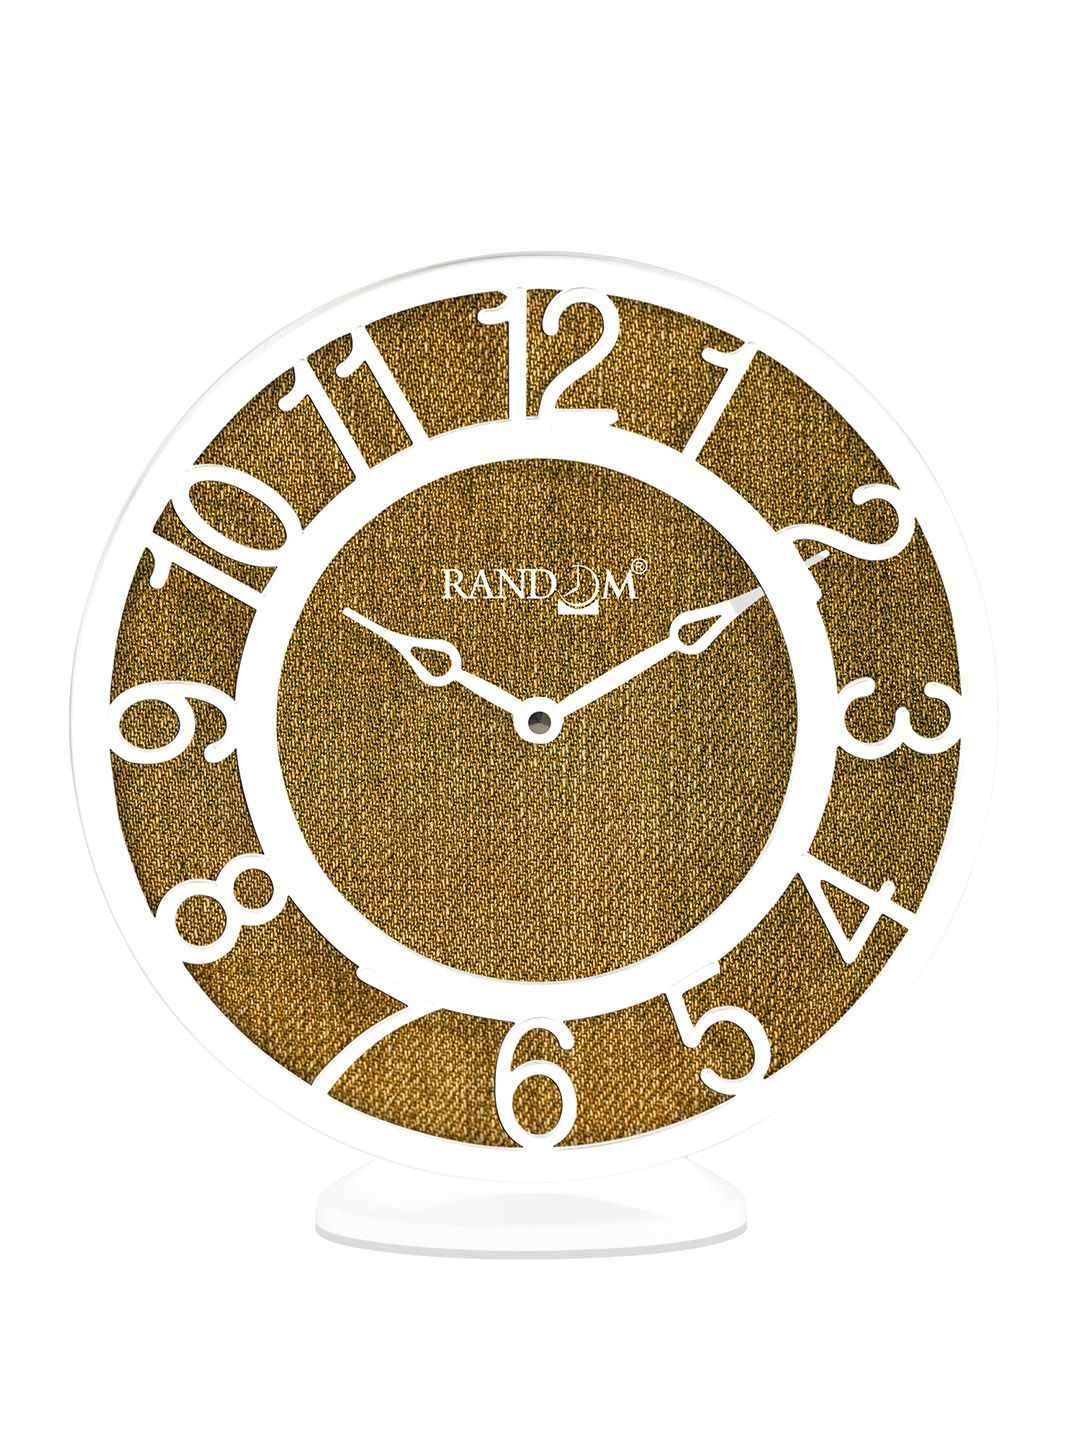 RANDOM Khaki & White Round Printed Contemporary Analogue Wall Clock Price in India